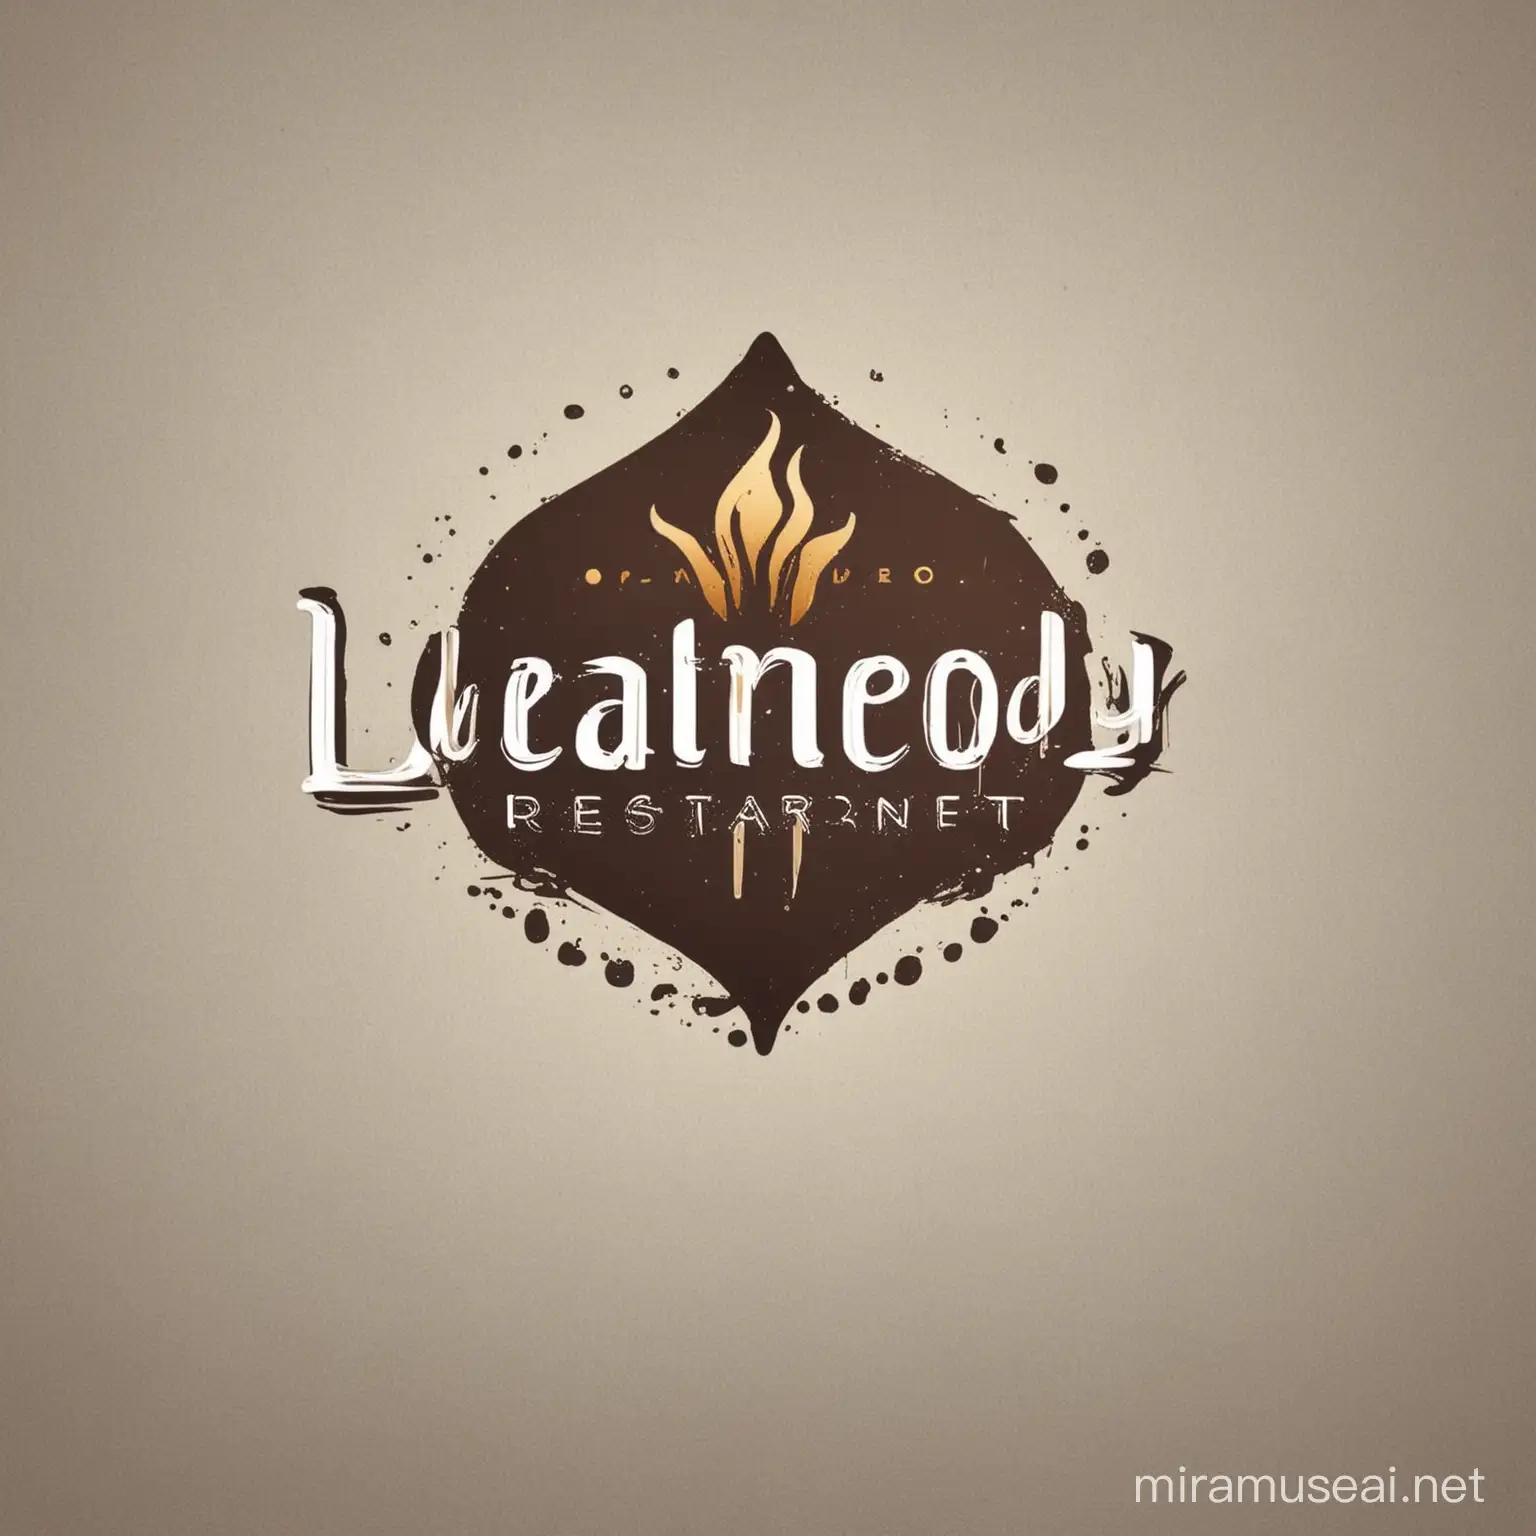 generate a logo for LeadMelody restaurant
